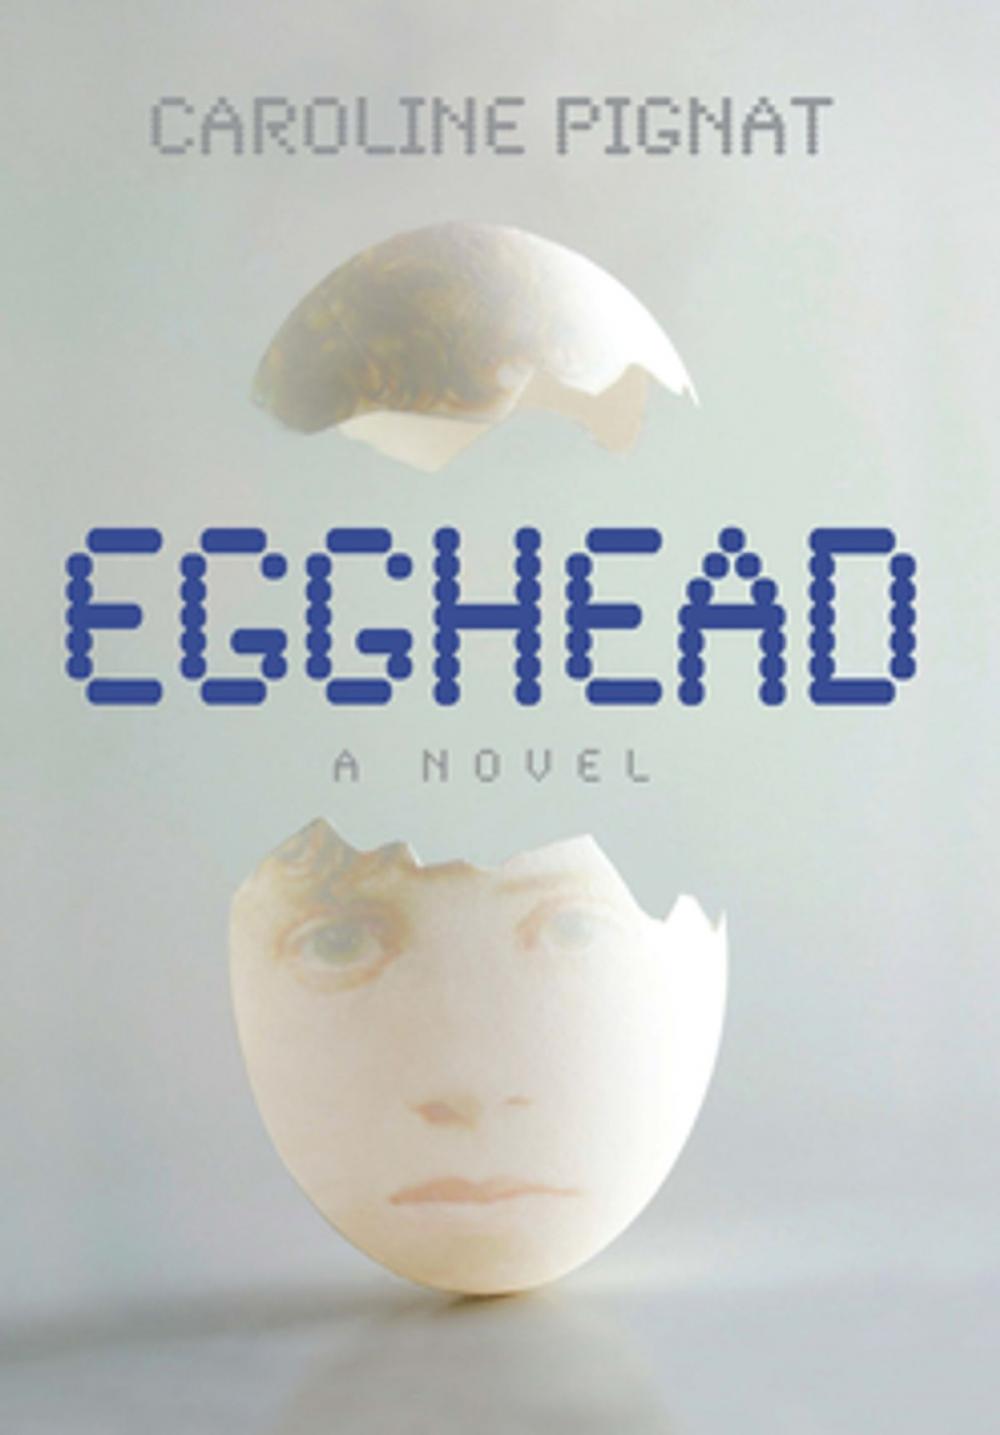 Big bigCover of Egghead